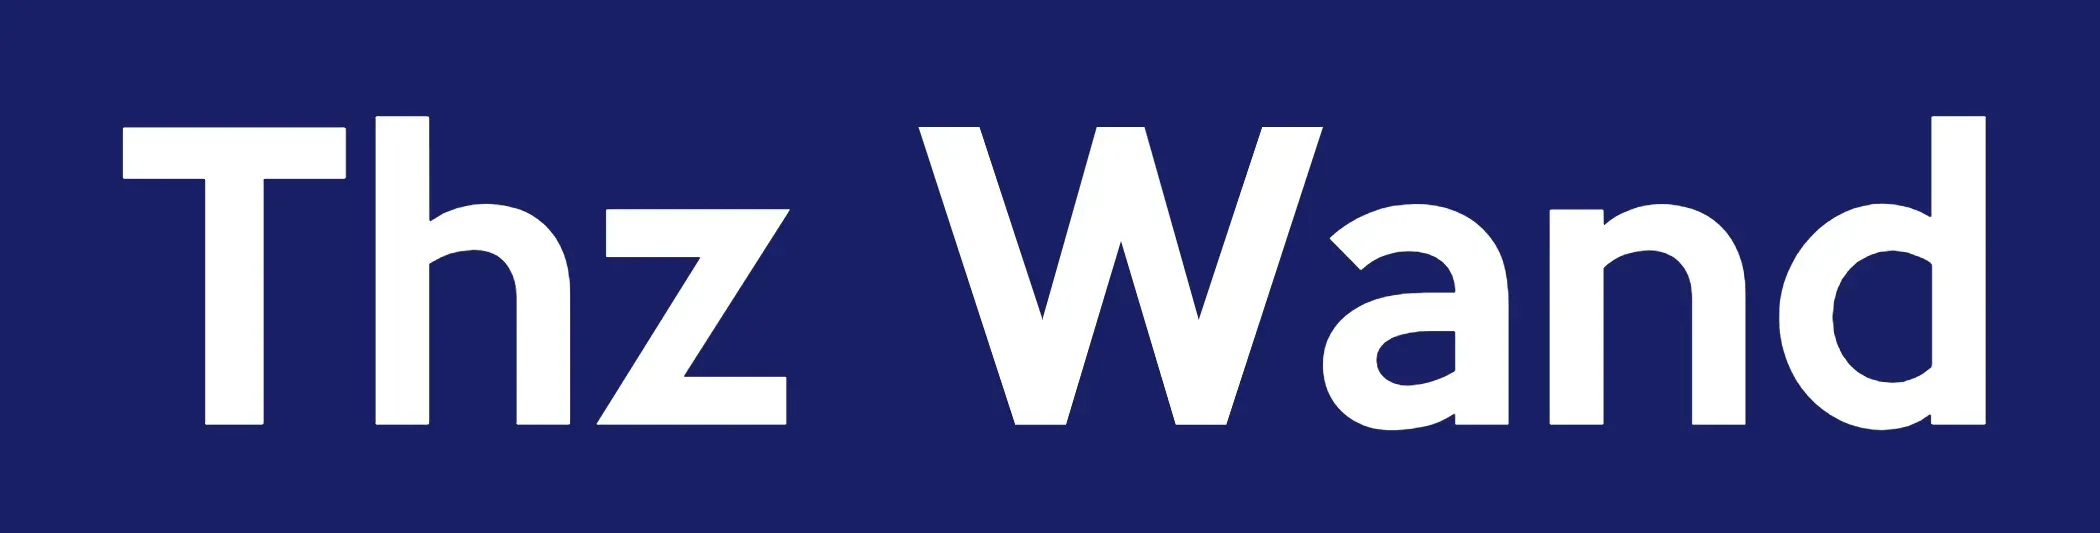 terahertz wand logo